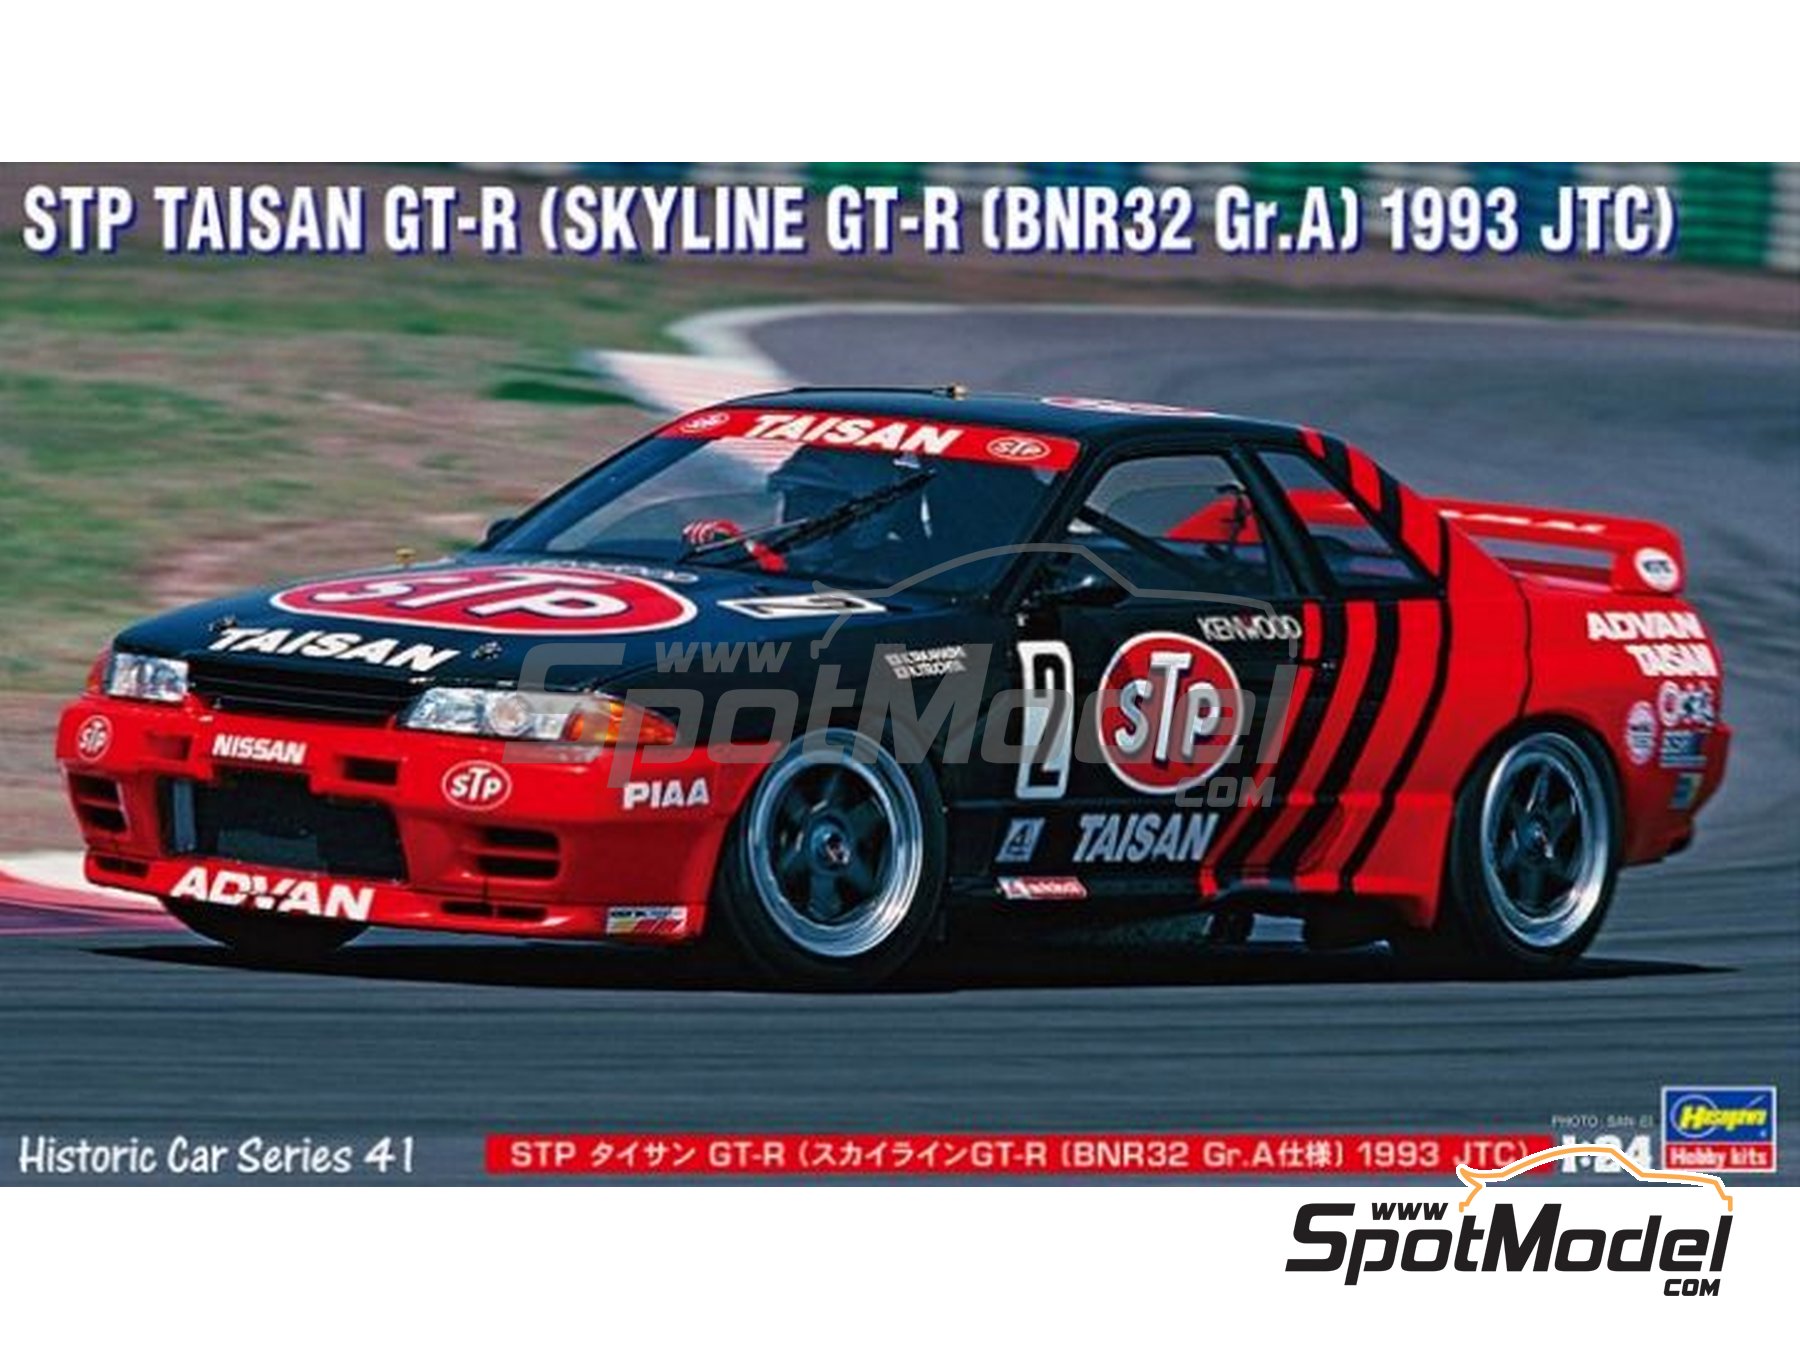 Hasegawa 21141: Car scale model kit 1/24 scale - Nissan Skyline GT